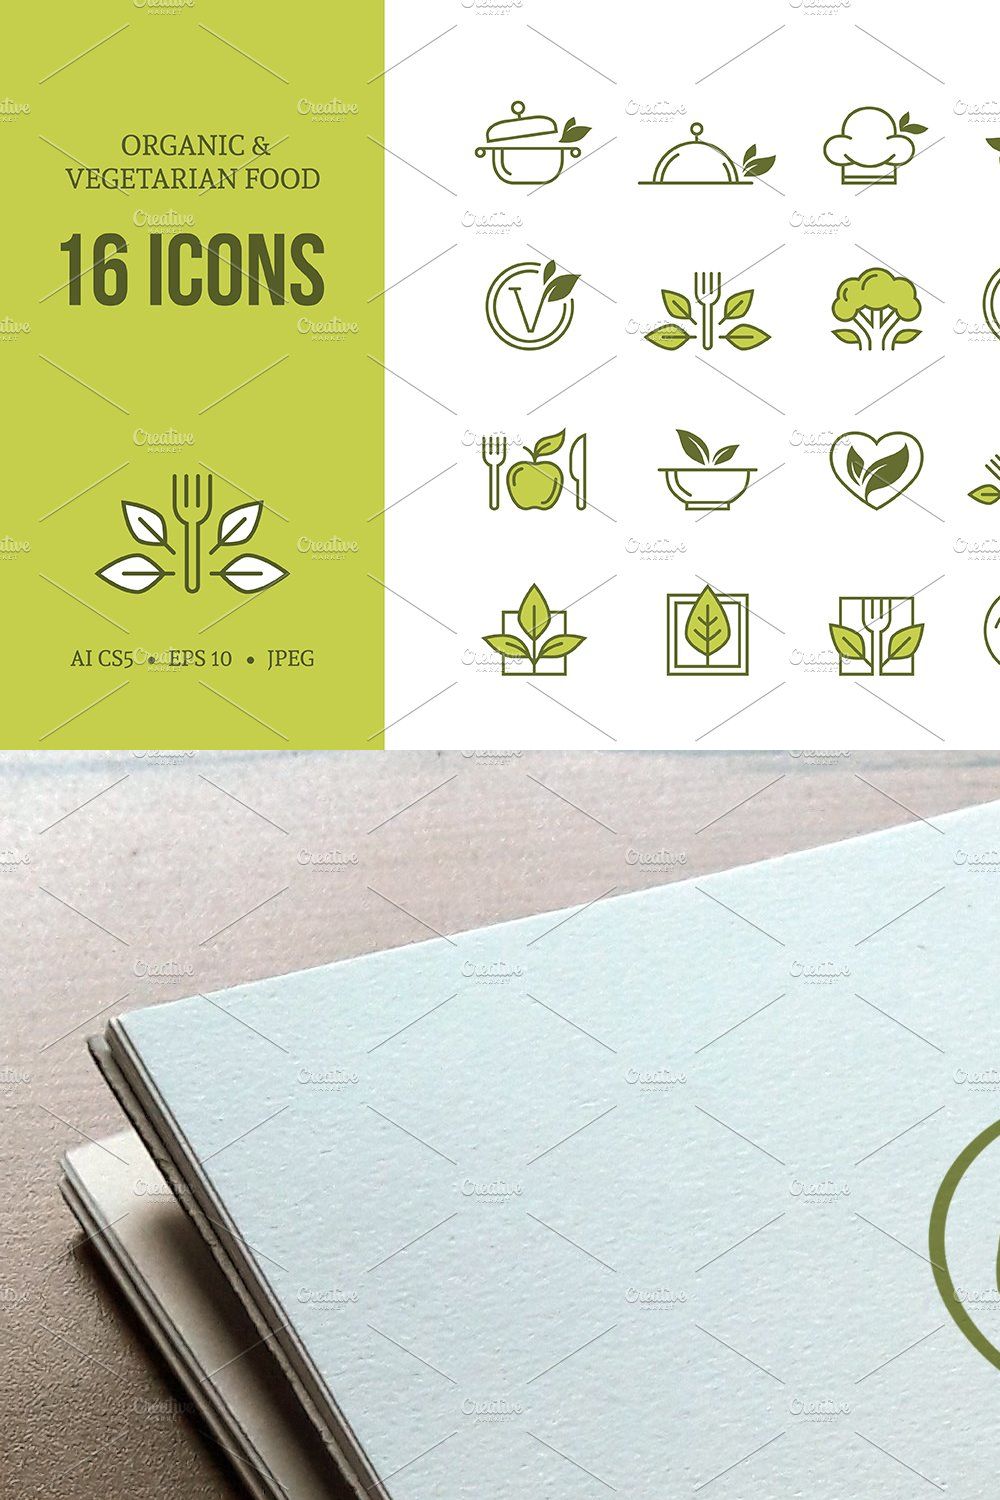 Organic & vegetarian food icons set pinterest preview image.